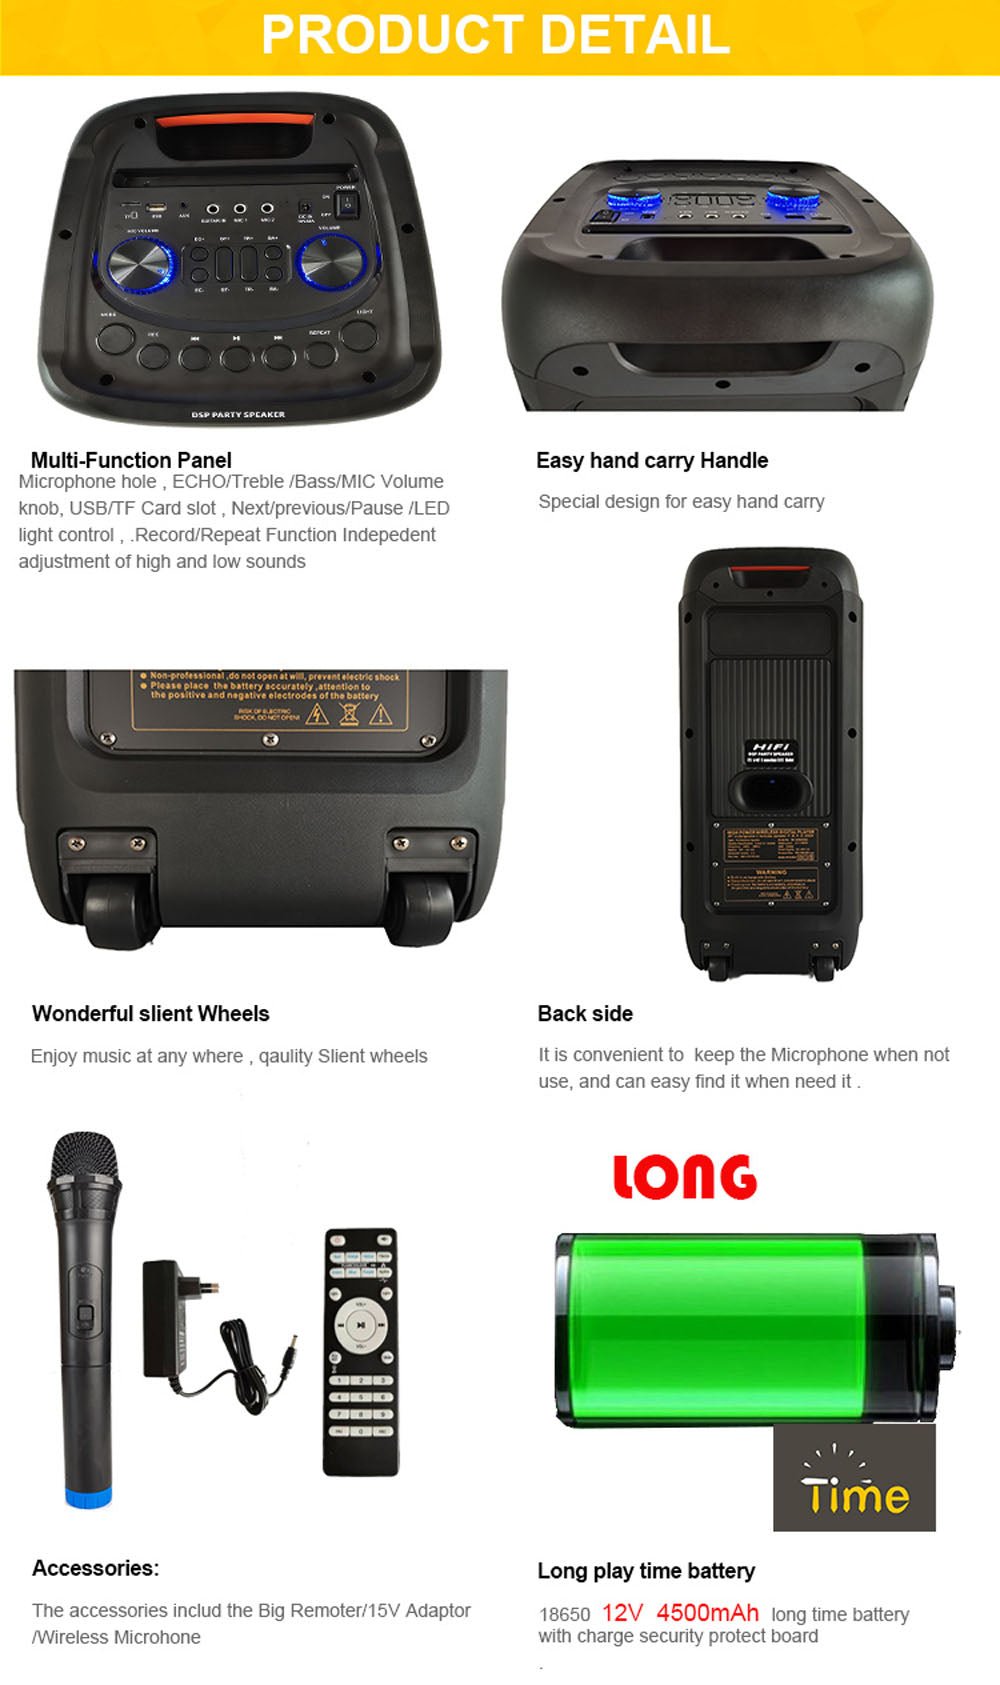 CRONY RX-8281 Speaker 8 inch 60W big power DSP effect running LED light portable party speaker - Edragonmall.com